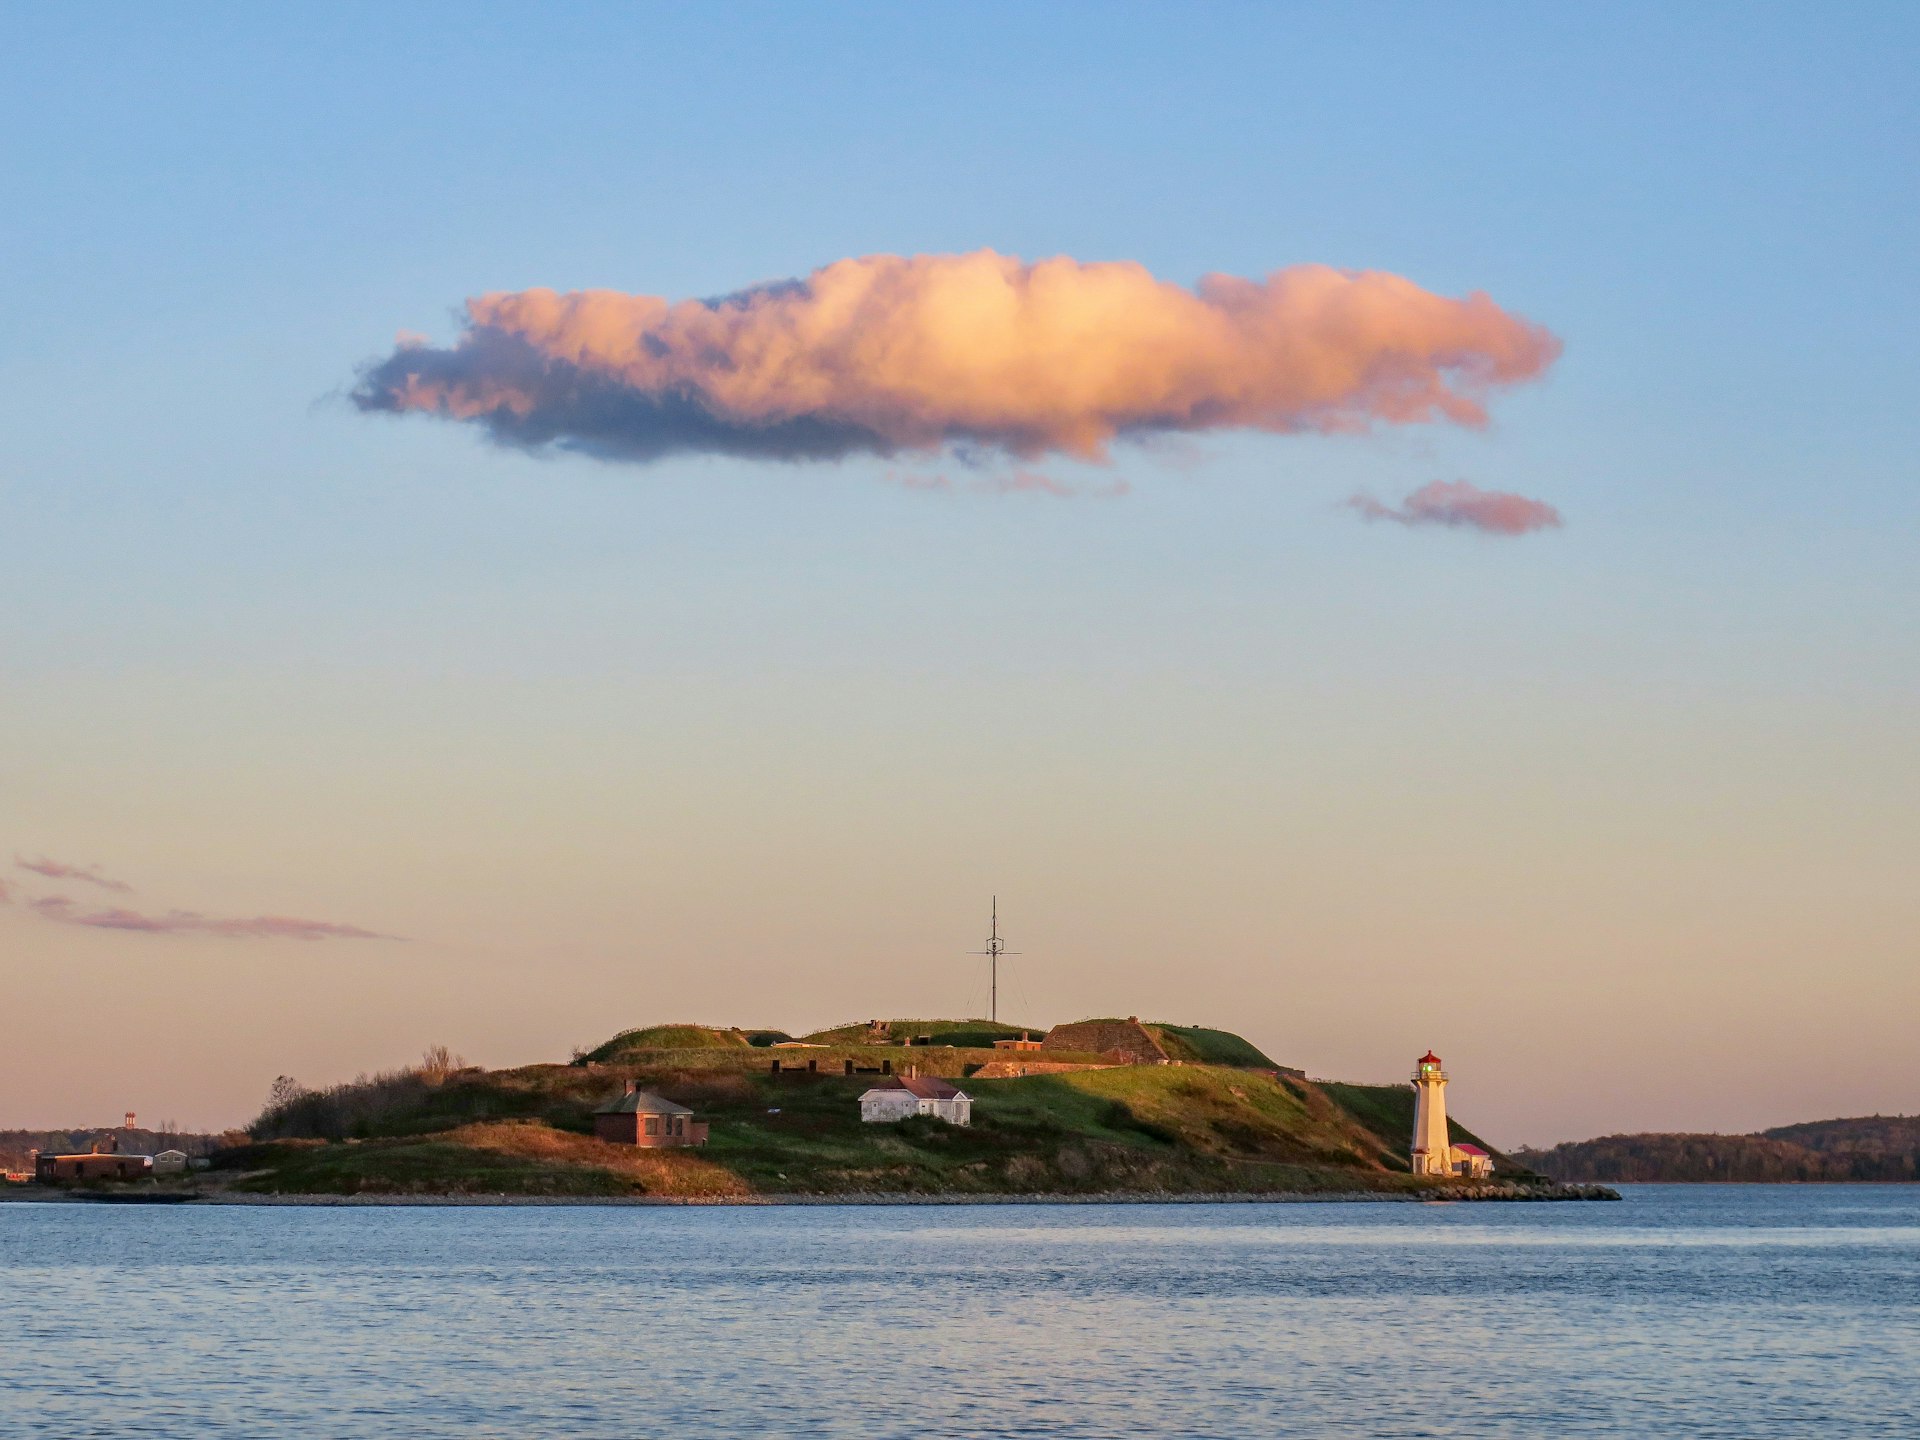 Georges Island off the coast of Halifax, Nova Scotia